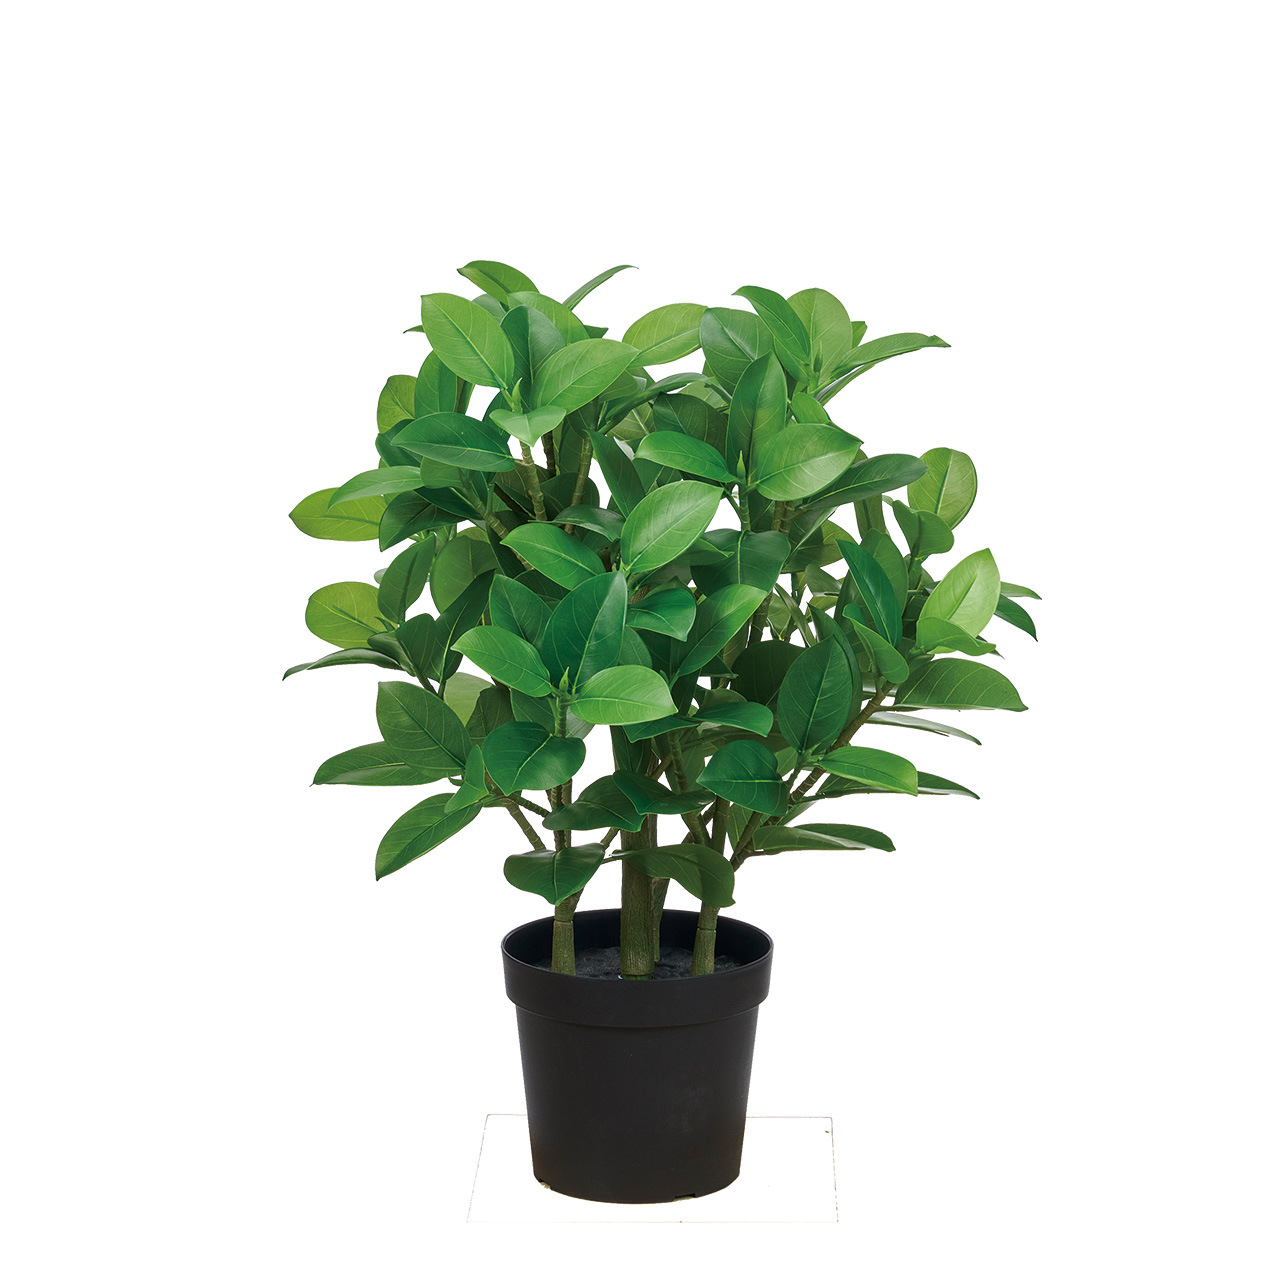 MAGIQ　ゴムノキポット3WAY　1鉢　観葉植物　組み立て式・3スタイルチェンジ　インテリアグリーン　フェイクグリーン　FG000778